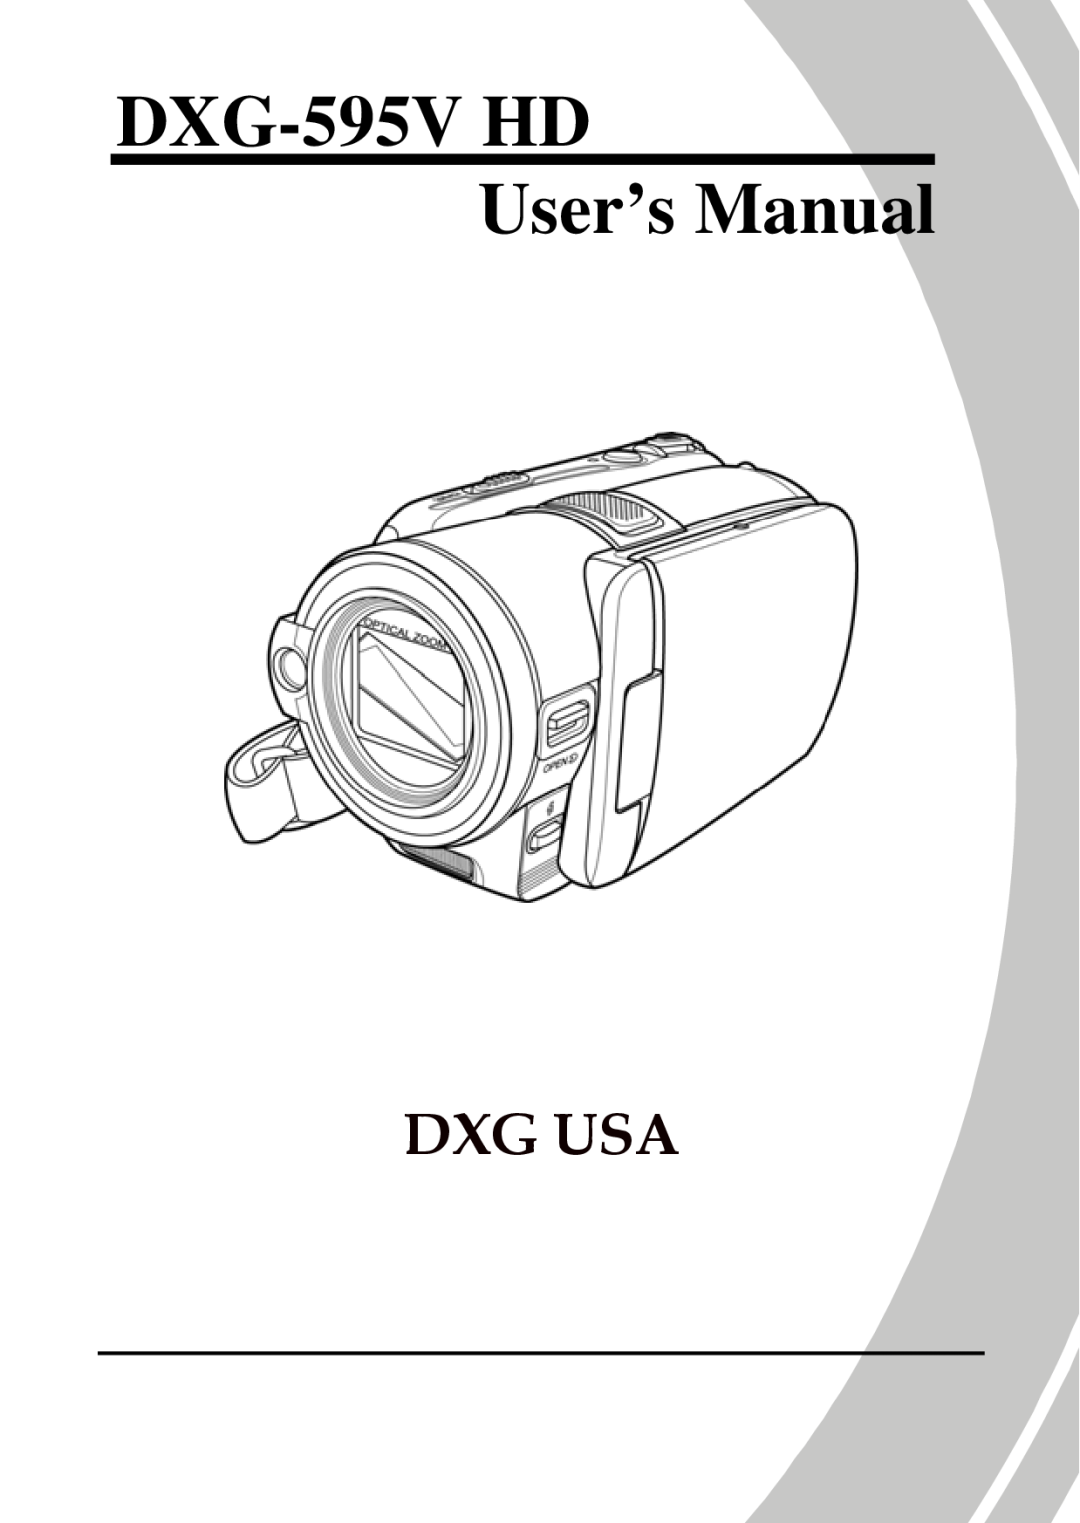 DXG Technology manual DXG-595V HD User’s Manual, Dxg Usa 